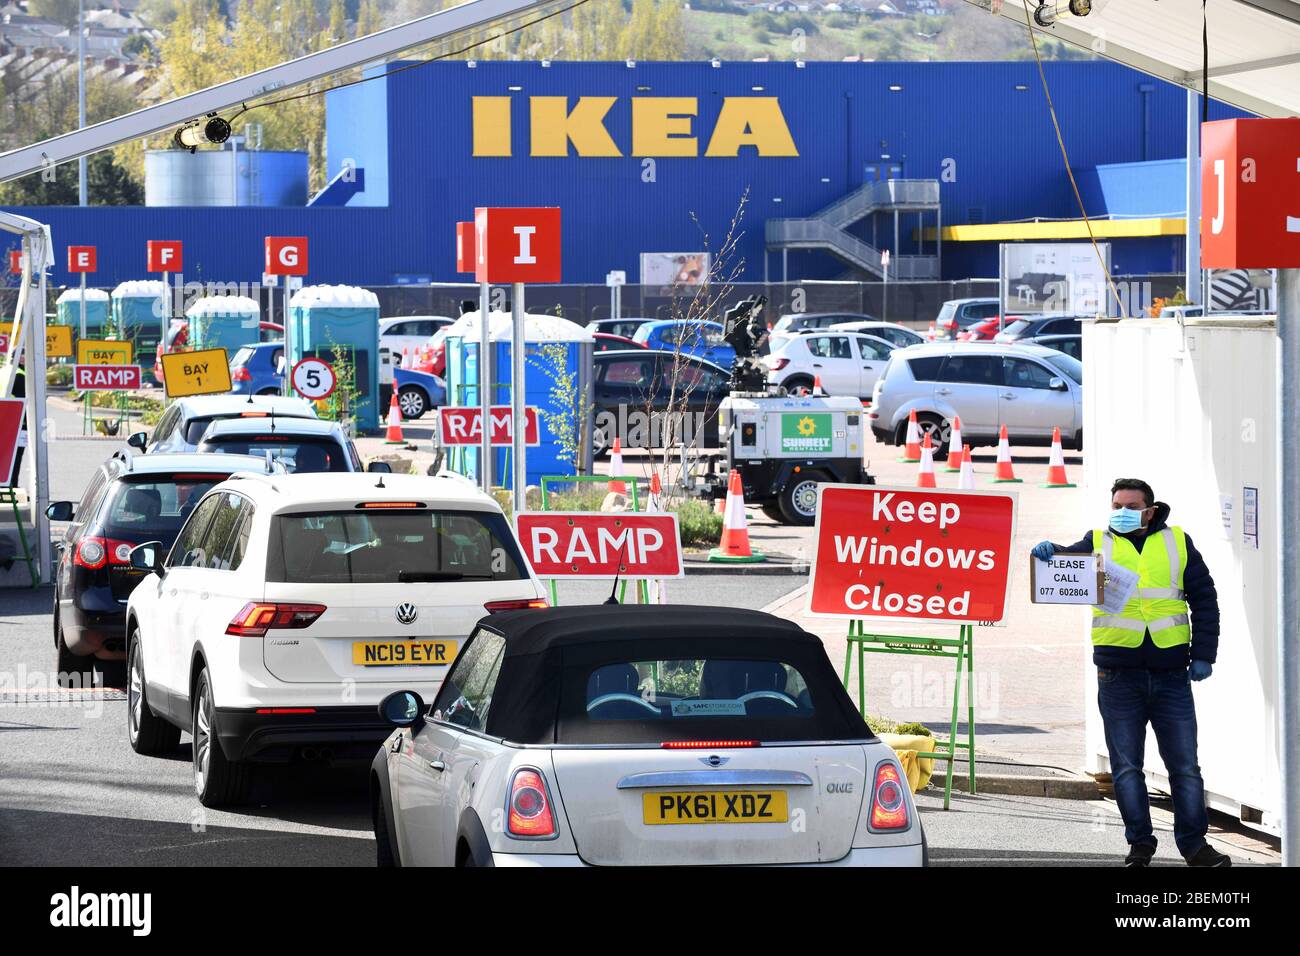 Ikea gateshead hi-res stock photography and images - Alamy